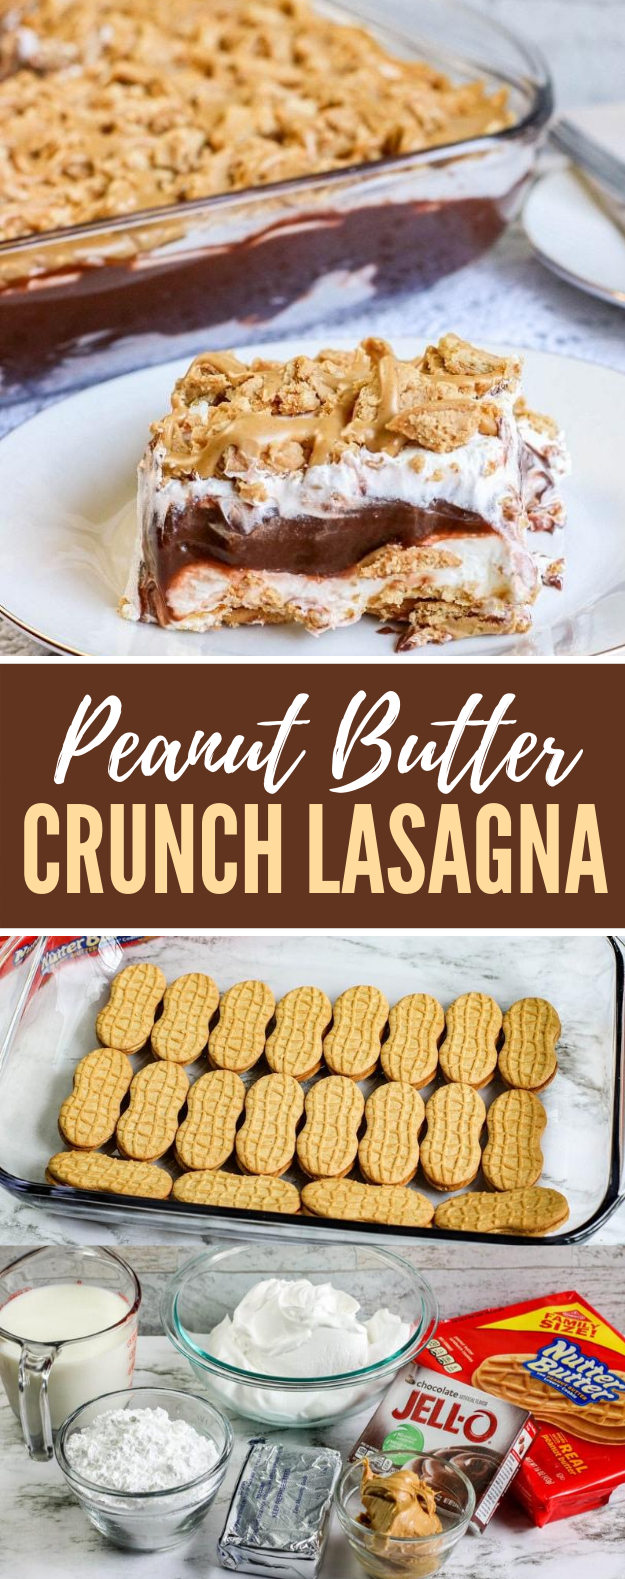 Peanut Butter Crunch Lasagna #desserts #cake #lasagna #sweets #peanutbutter